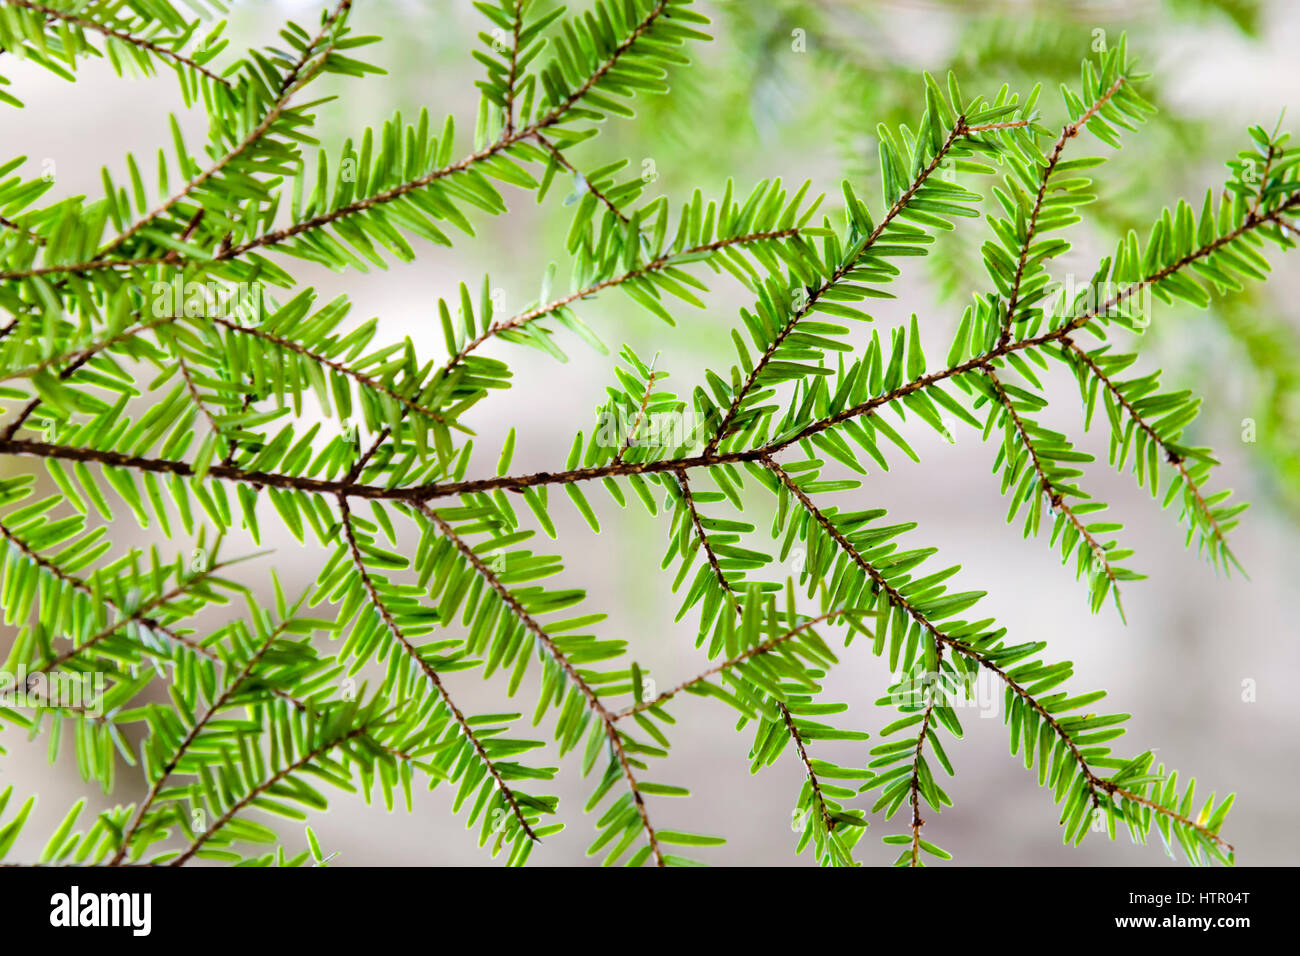 Hemlock tree branch with green needles close up. Stock Photo